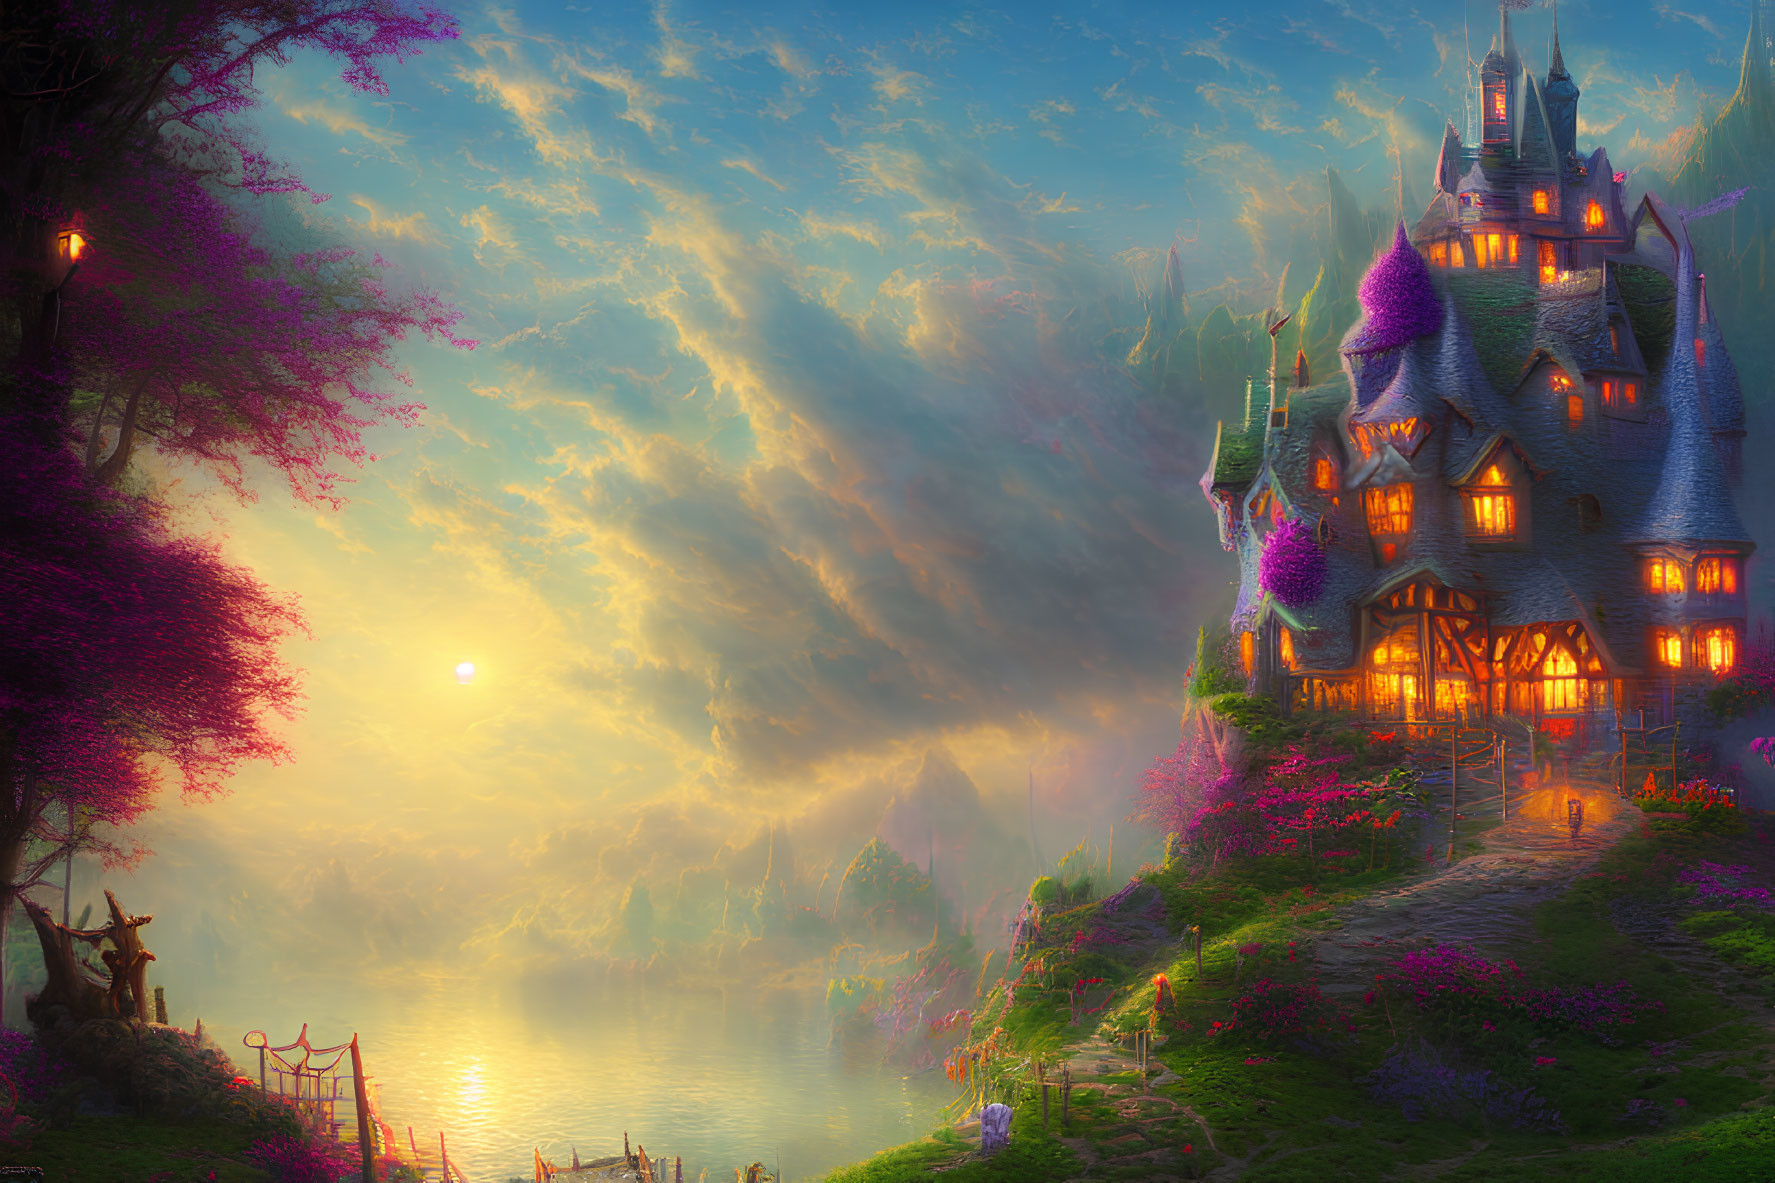 Fantasy landscape with grand house, purple foliage, serene lake, and illuminated path